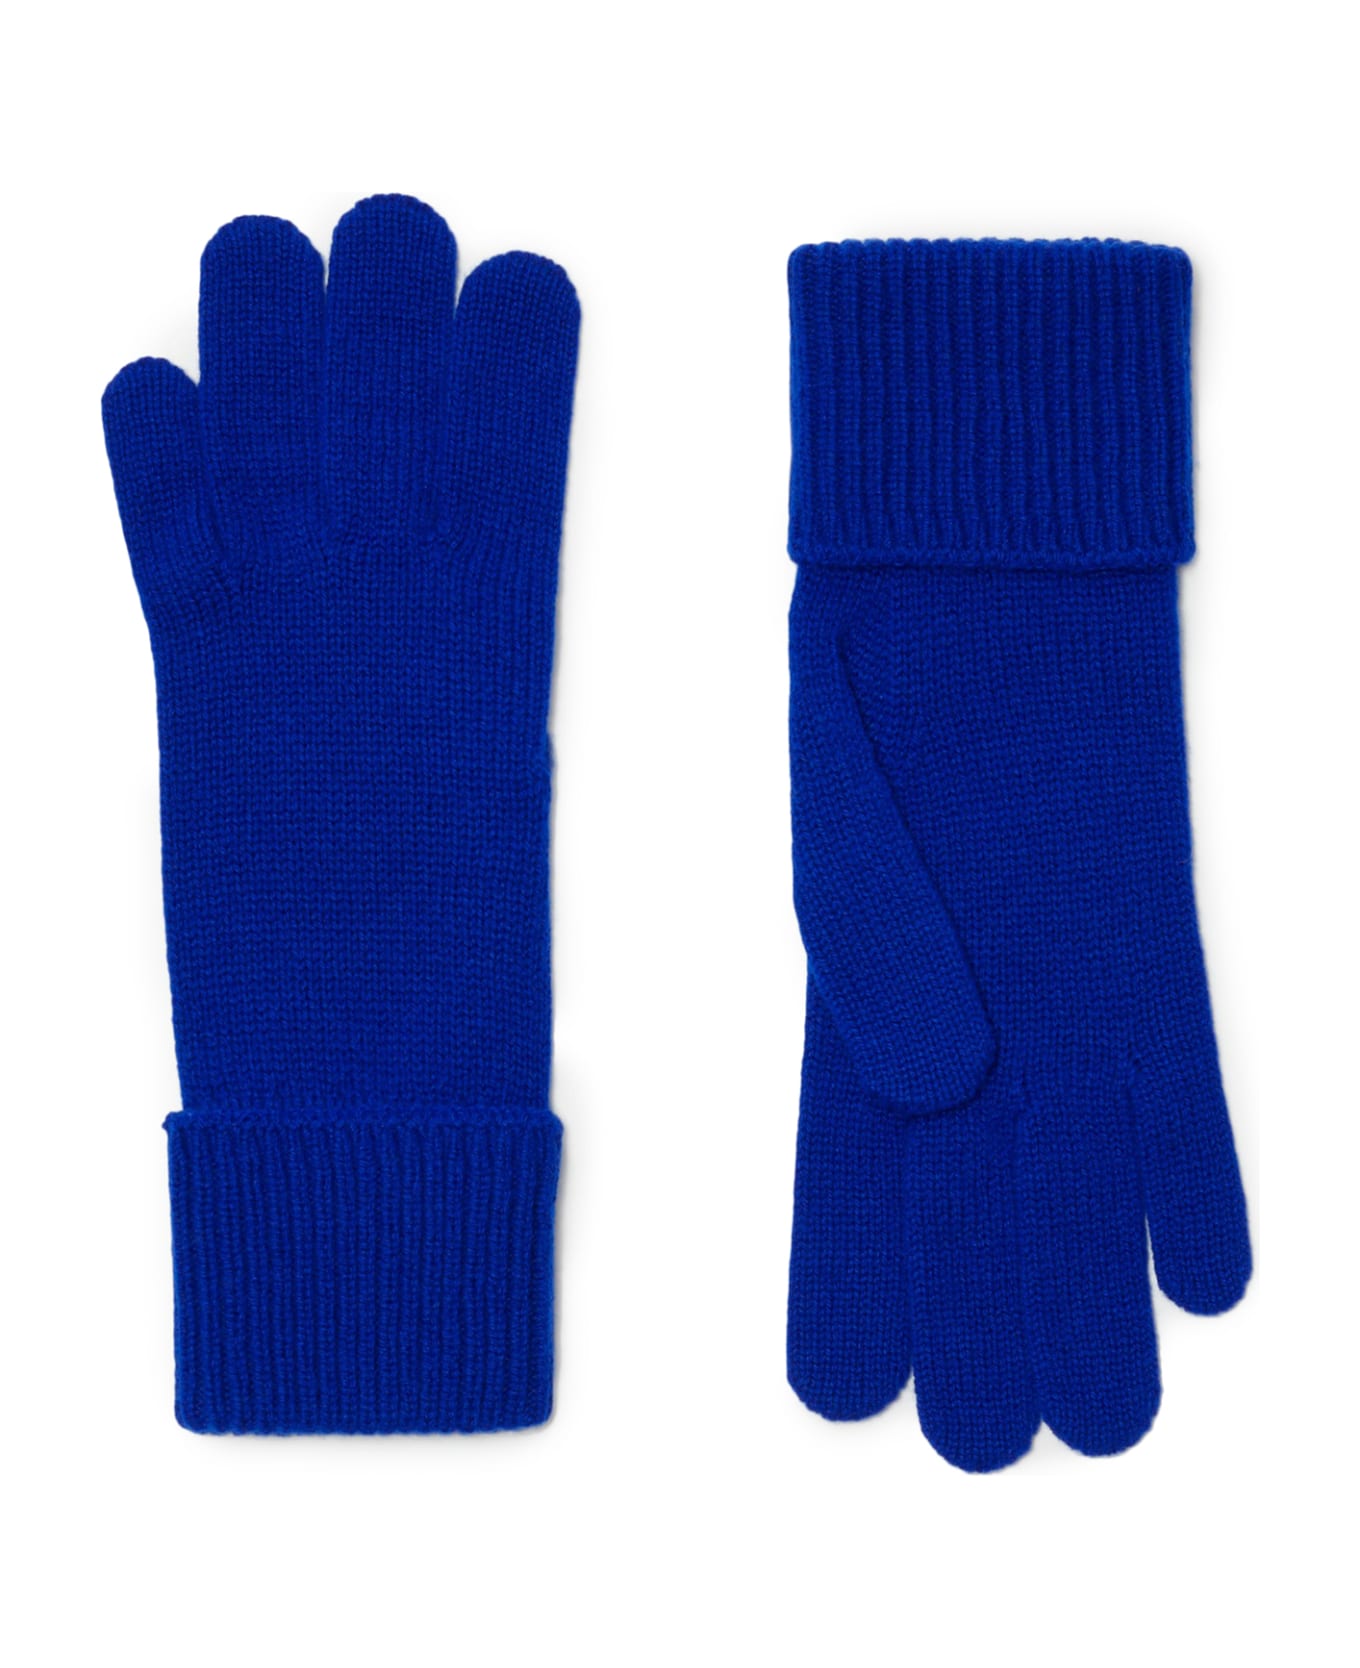 Burberry Lg Ekd Cashmere Gloves - Knight